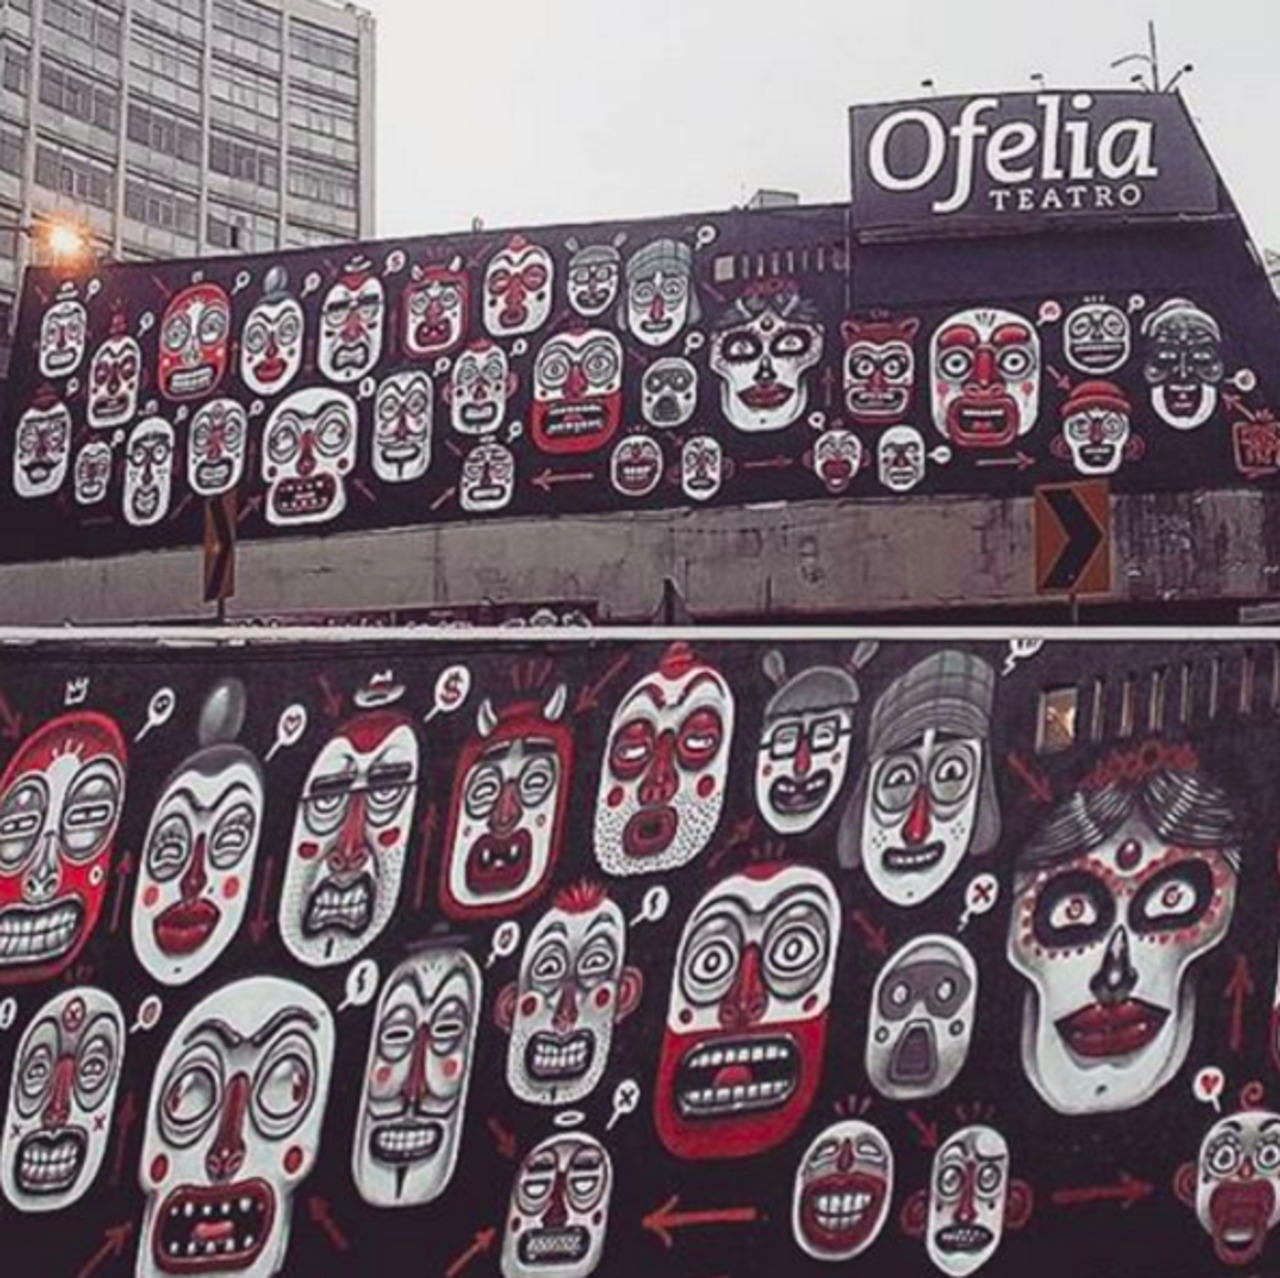 .@misterhoms invade el #TeatroOfelia en #CDMX con su #mural "Cara Mascaras" #streetart #graffiti #mexico #urbanart https://t.co/BhFeHazhuL